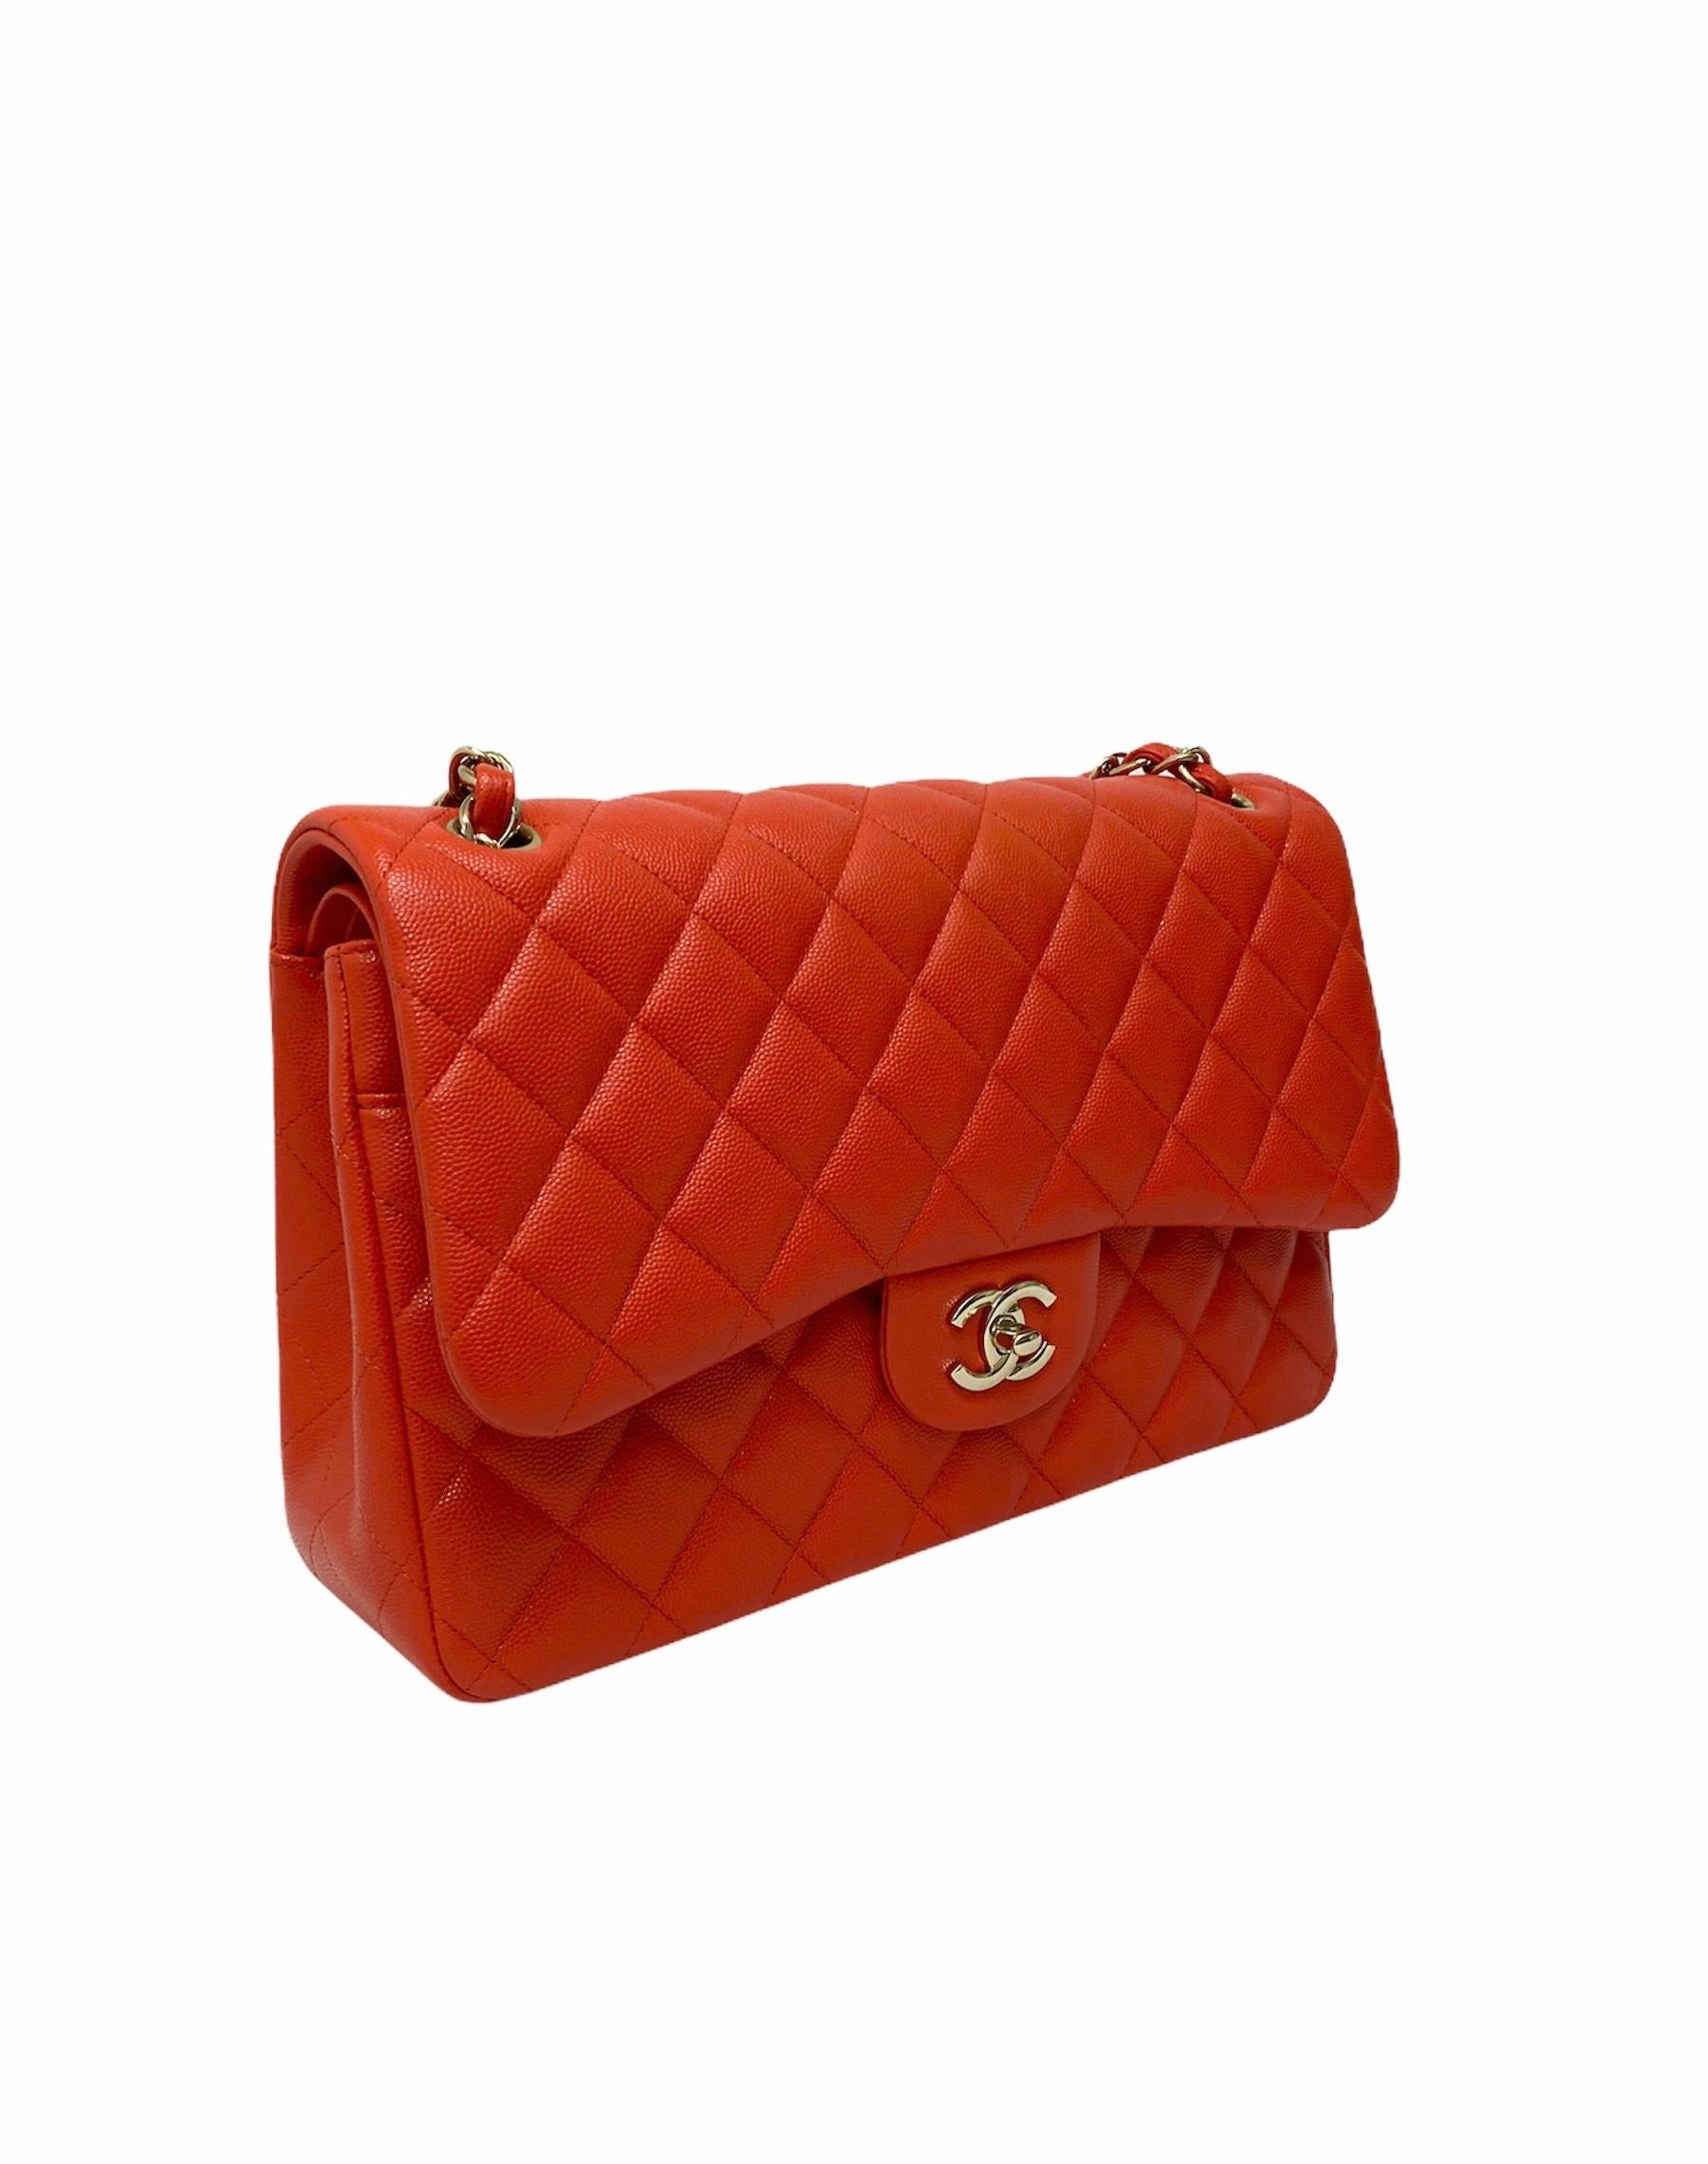 chanel red handbag 2019